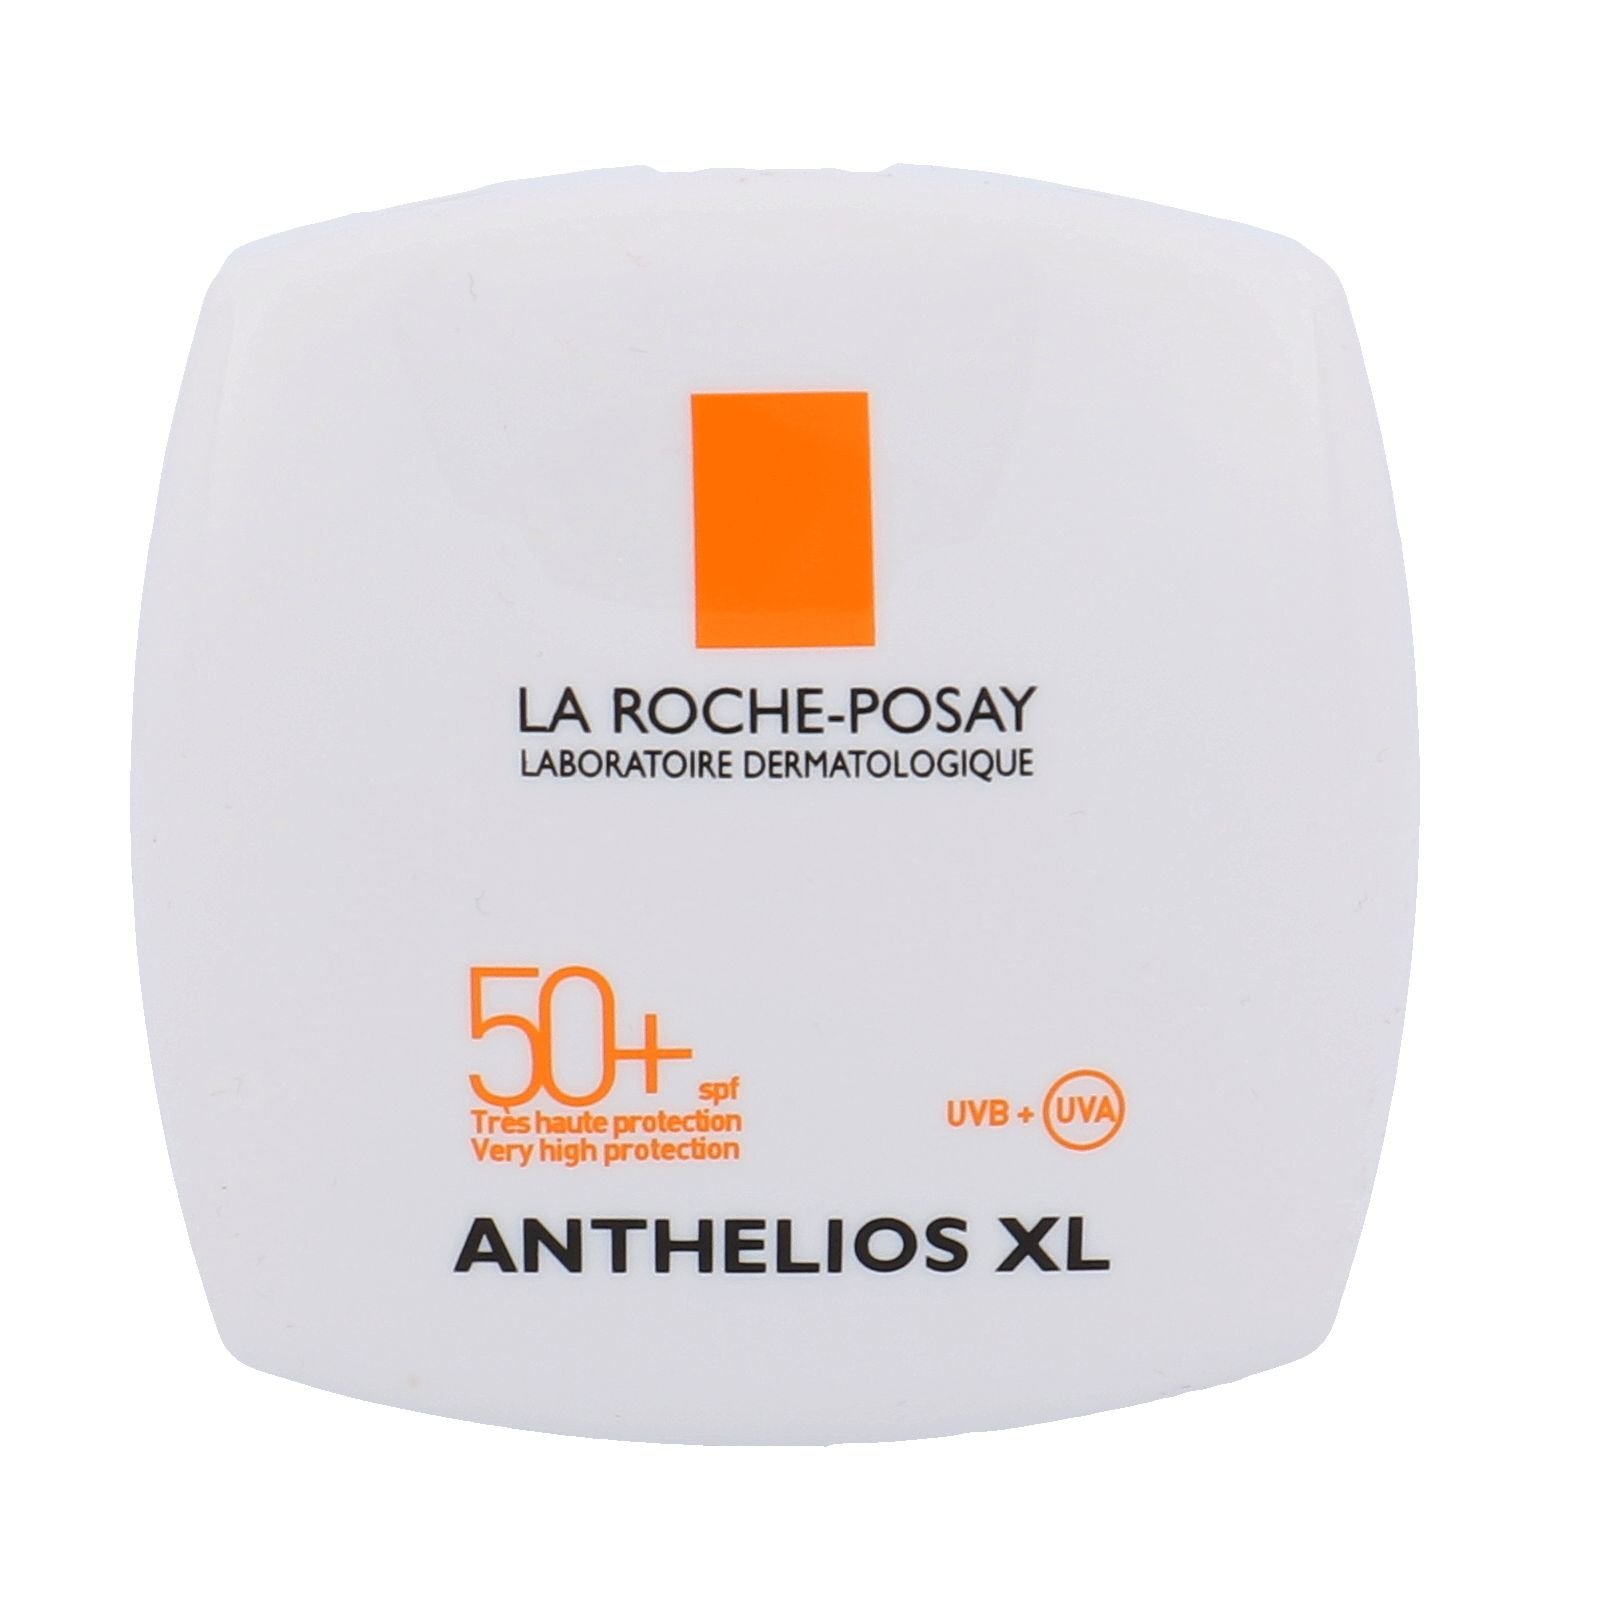 La Roche-Posay Anthelios XL Compact Cream veido apsauga